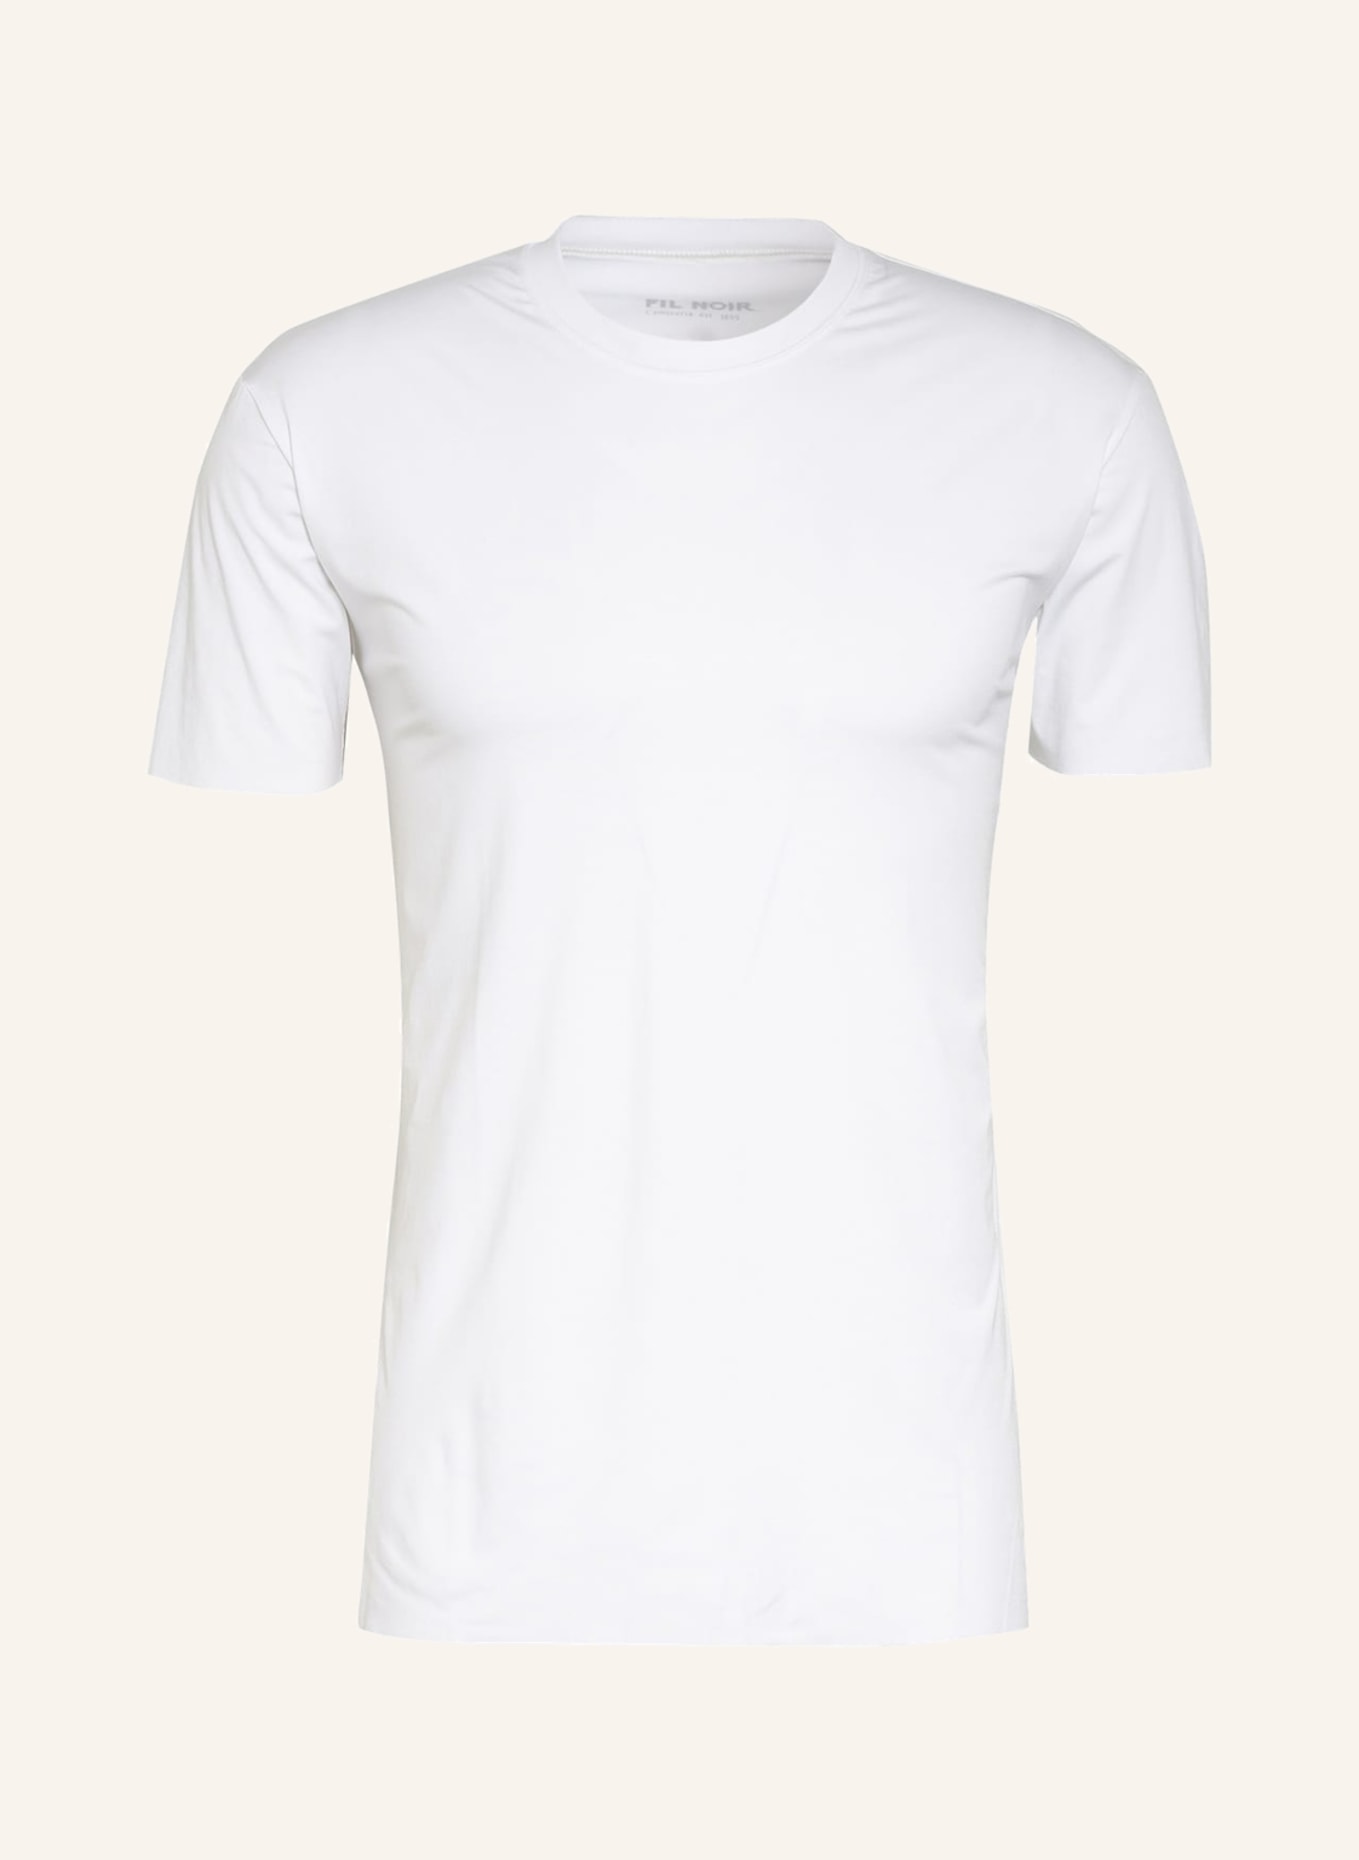 FIL NOIR T-shirt MONEGLIA, Kolor: BIAŁY (Obrazek 1)